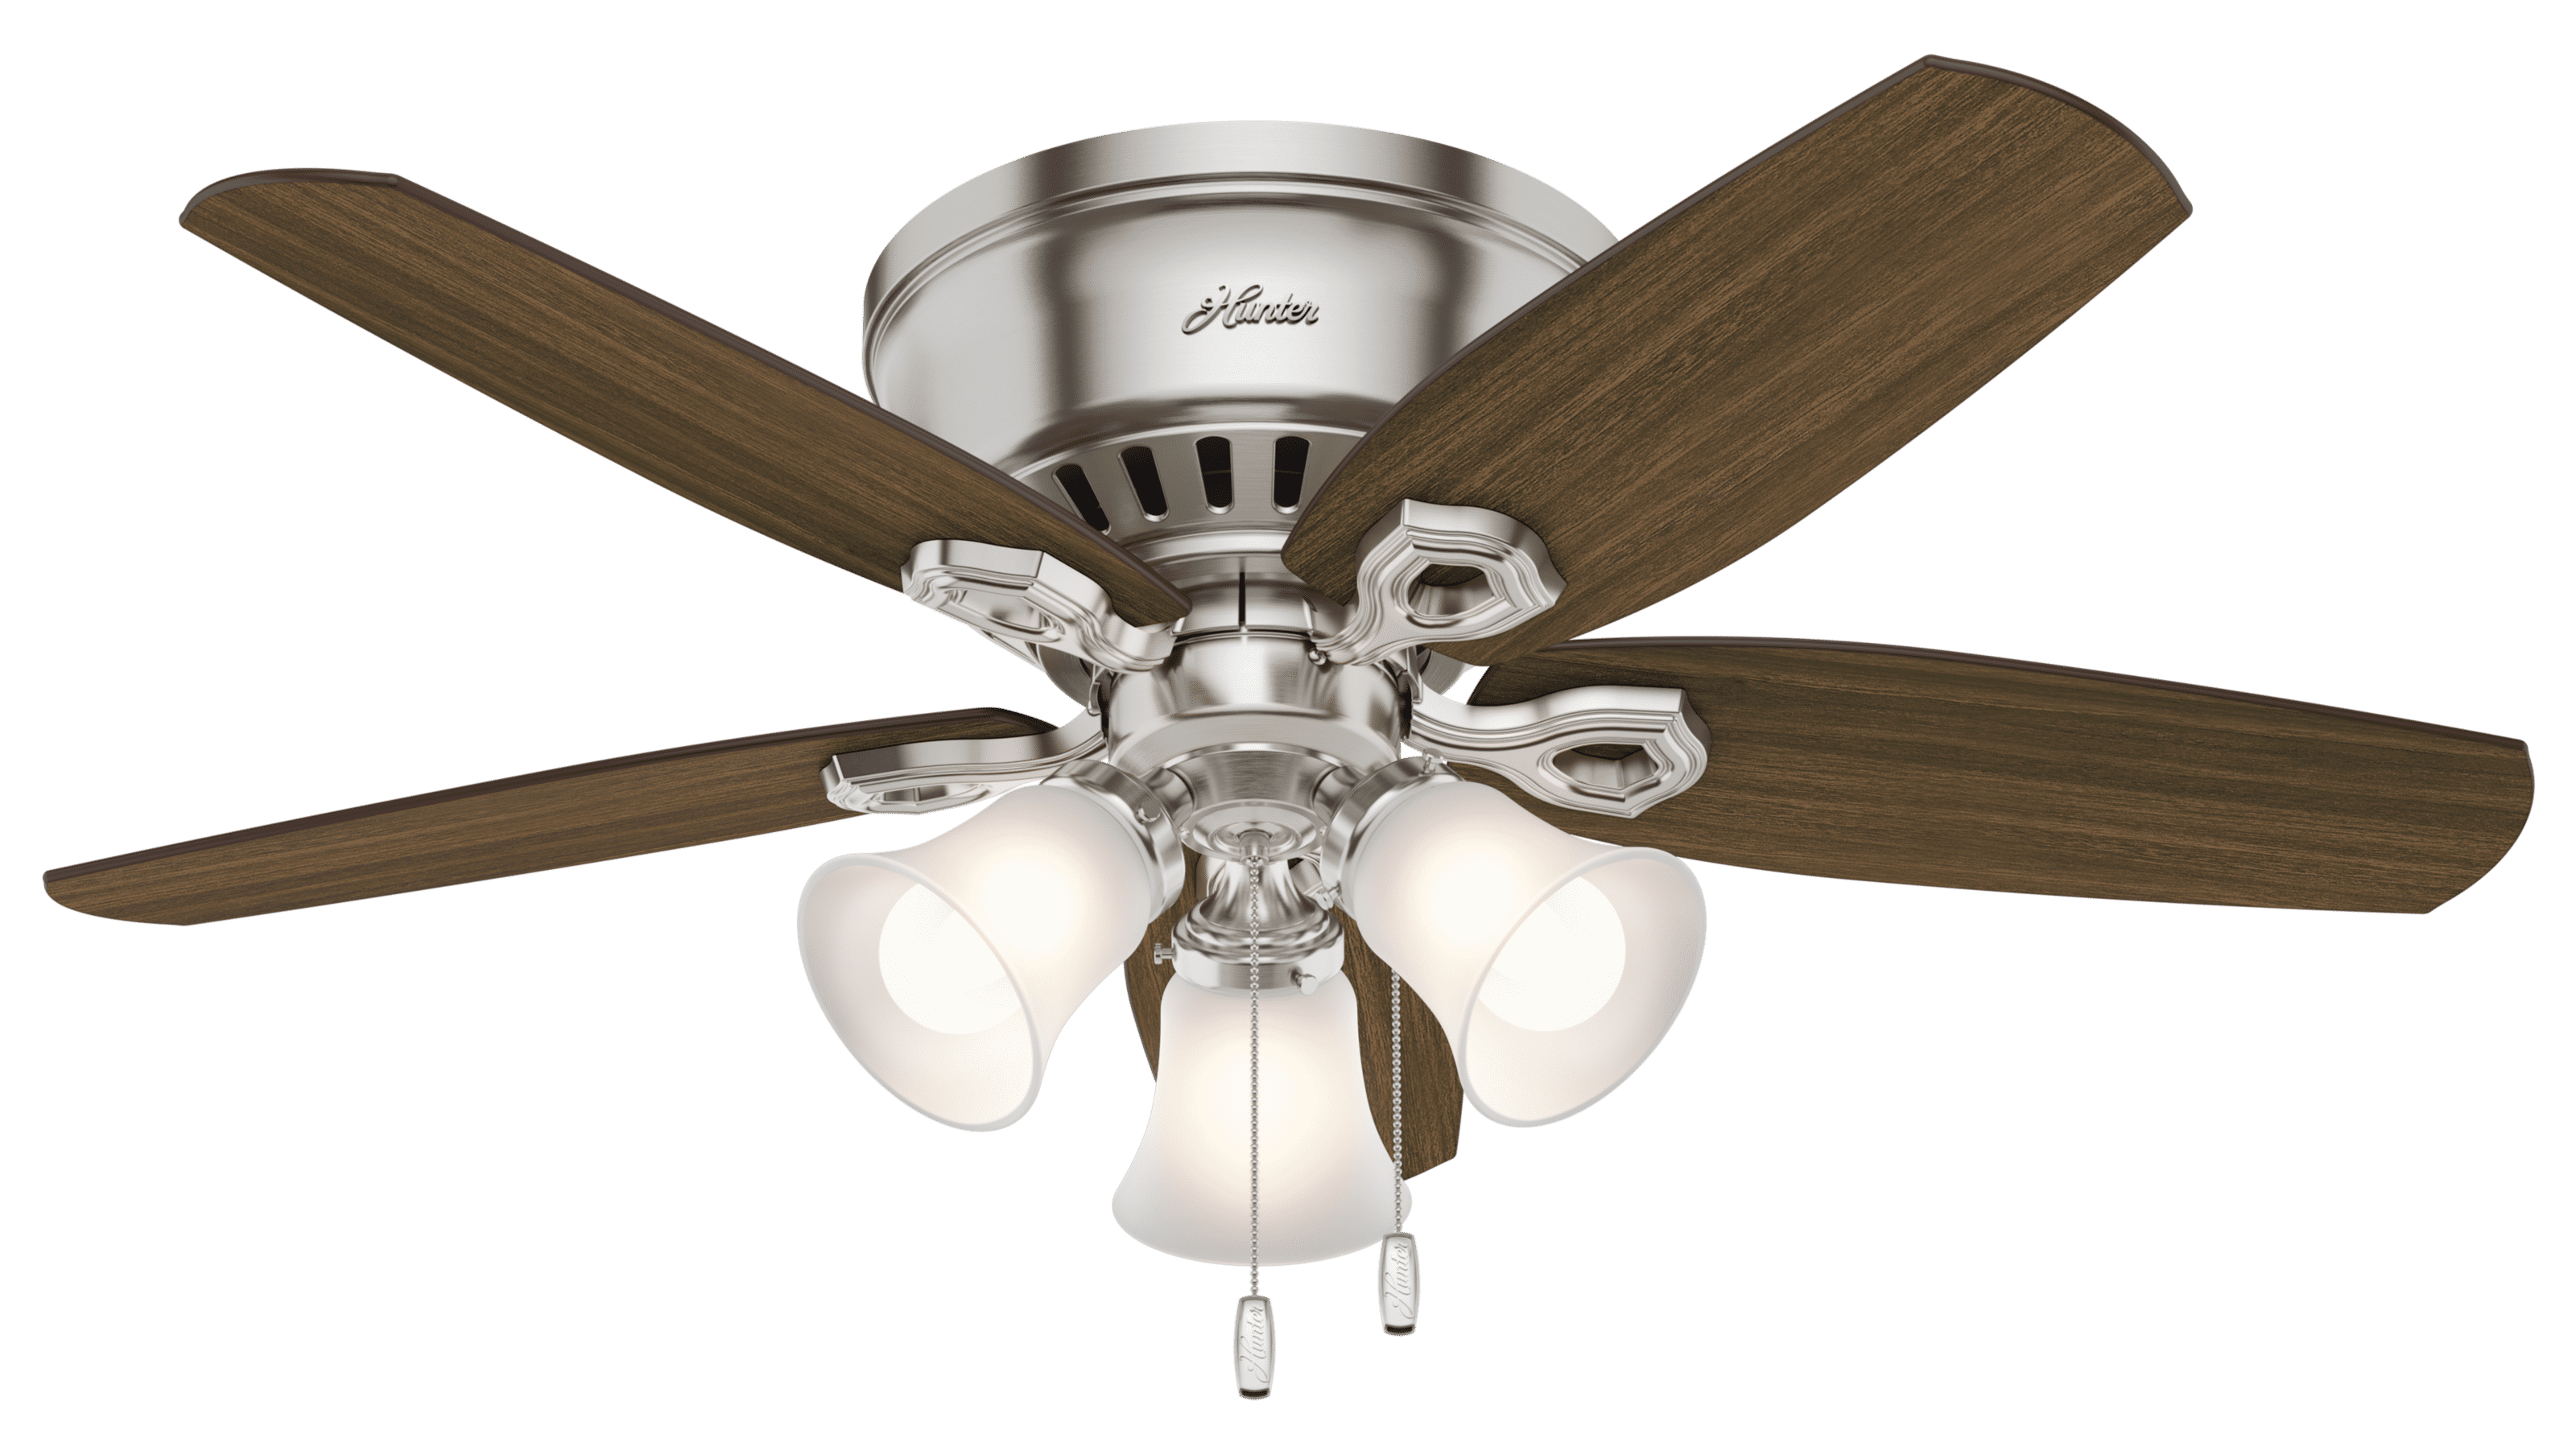 Hunter Fan 42 inch Low Profile Brushed Nickel Indoor Ceiling Fan with Light Kit 